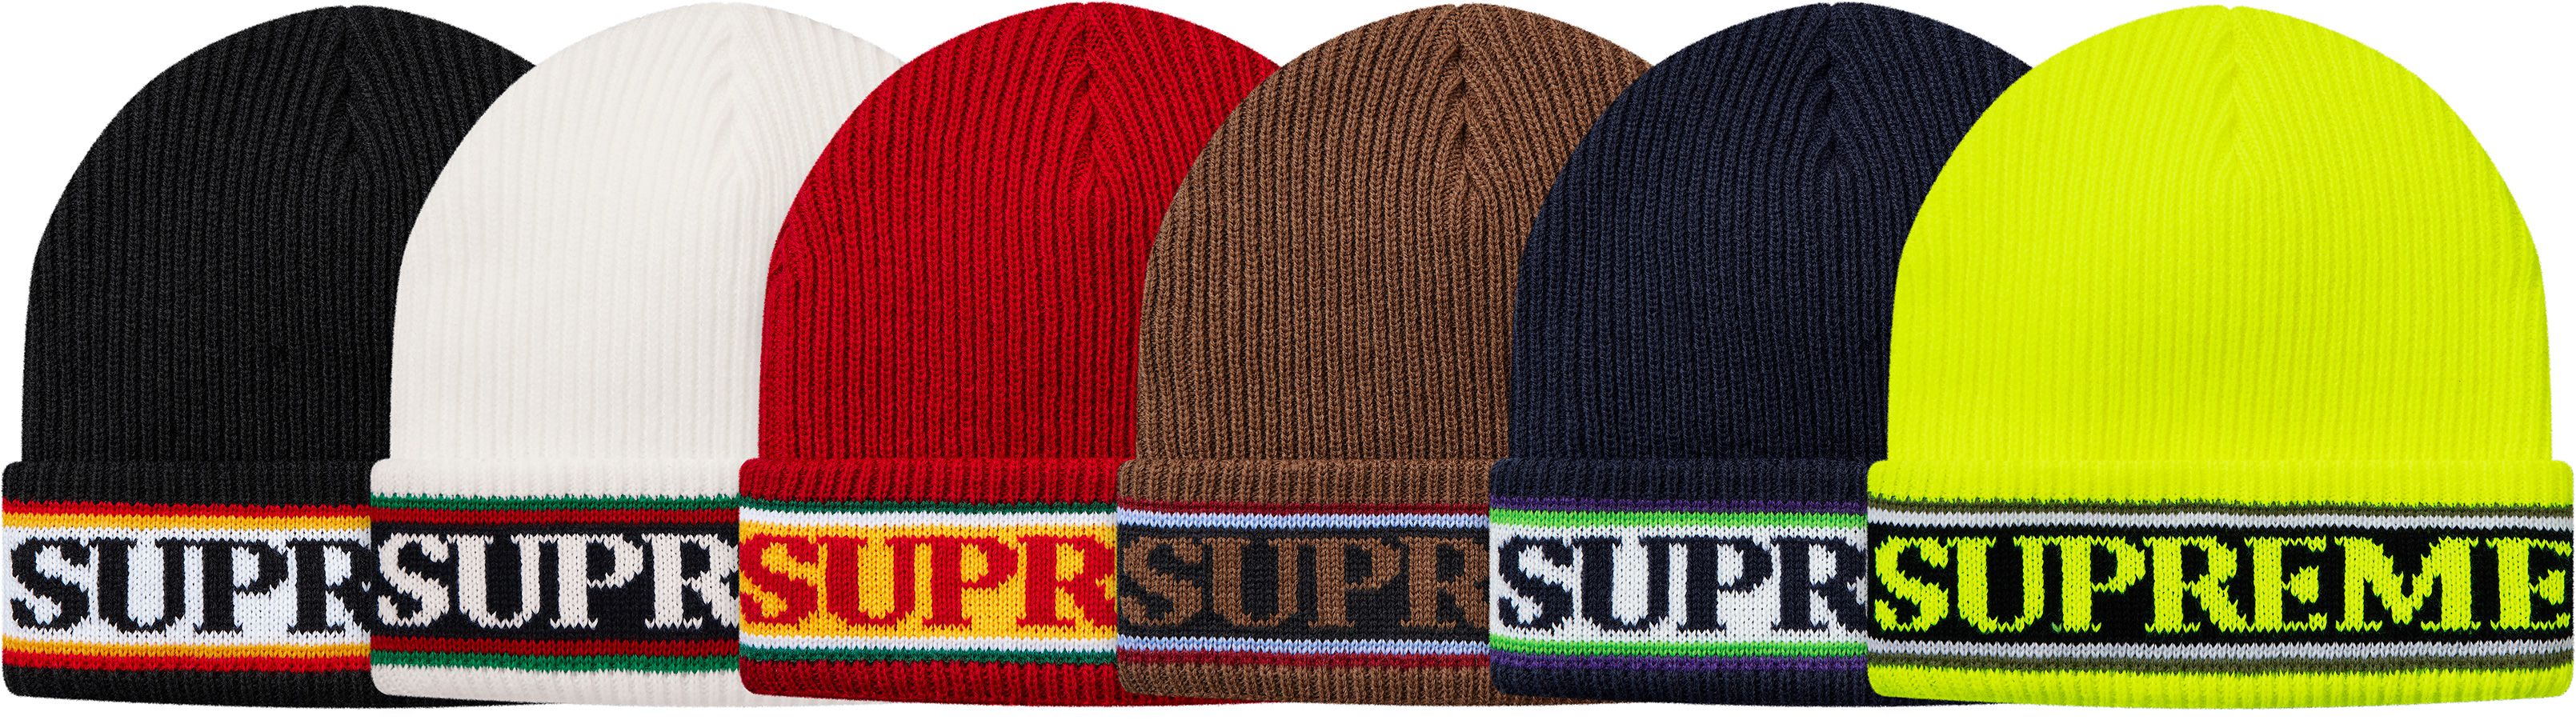 New Era® Big Logo Headband - Fall/Winter 2018 Preview – Supreme